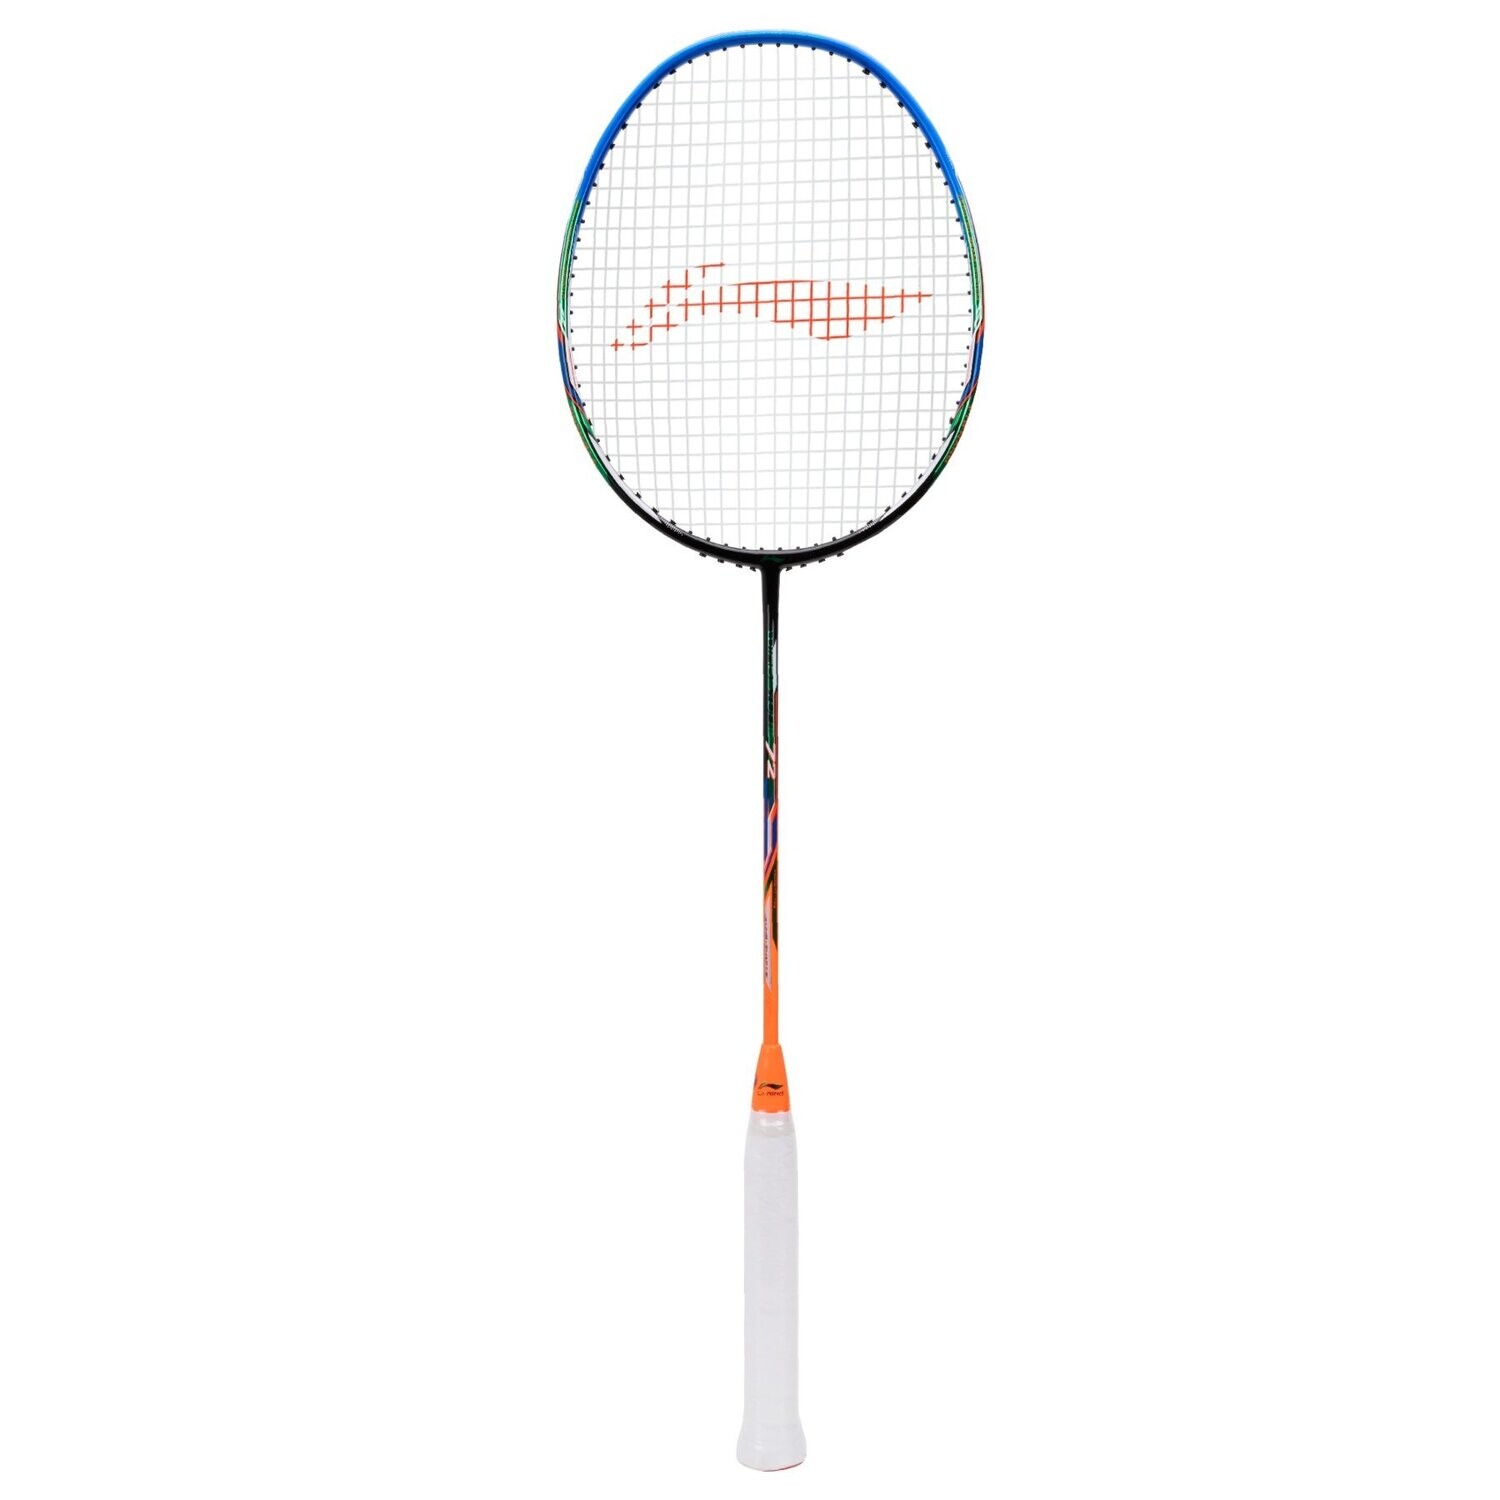 LI-NING WINDSTORM 72 -BLACK/BLUE/ORANGE Badminton Racquet